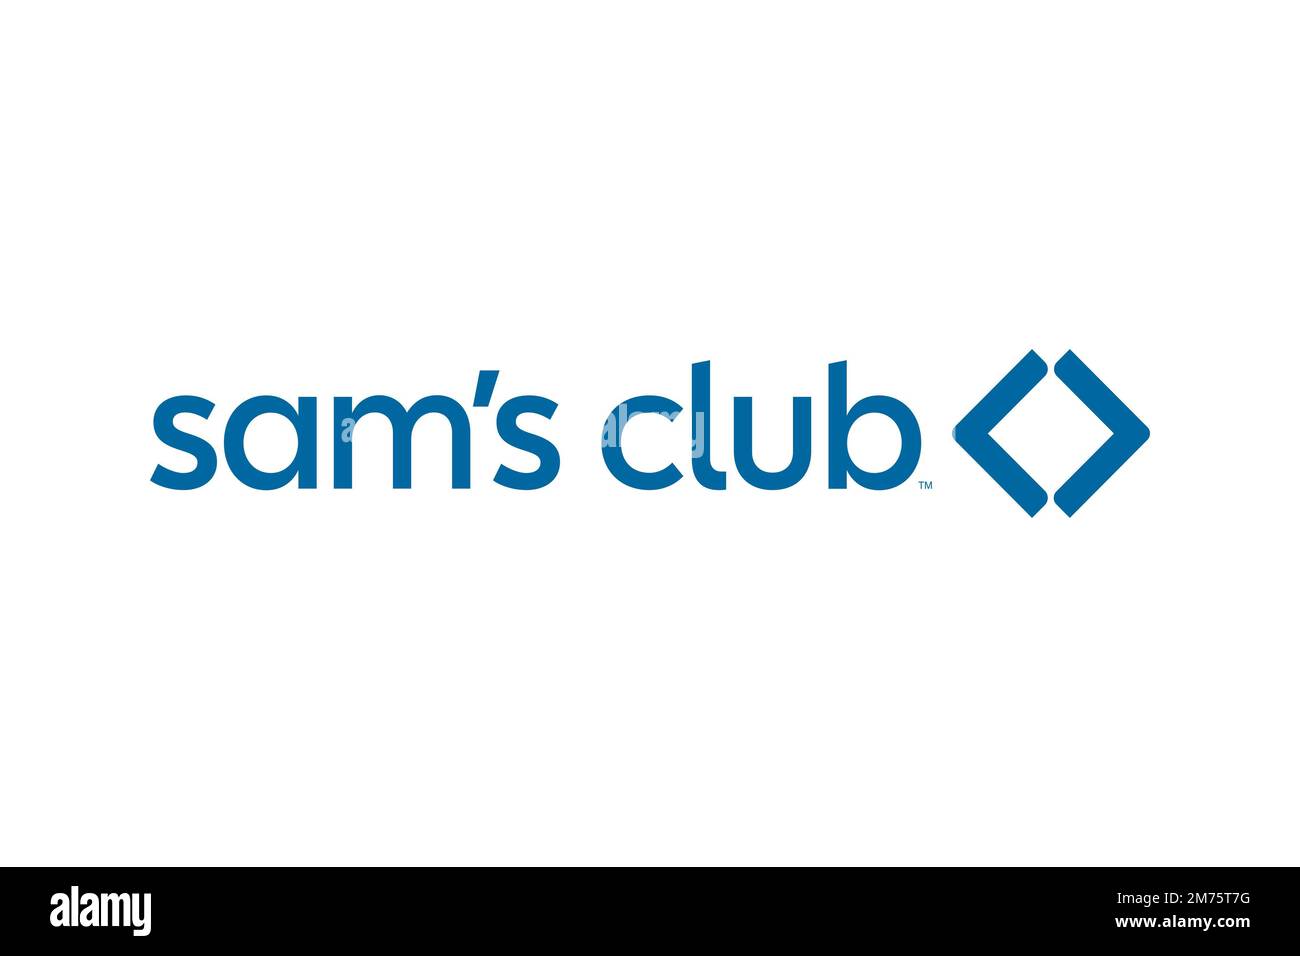 Sam's Club, Logo, White background Stock Photo